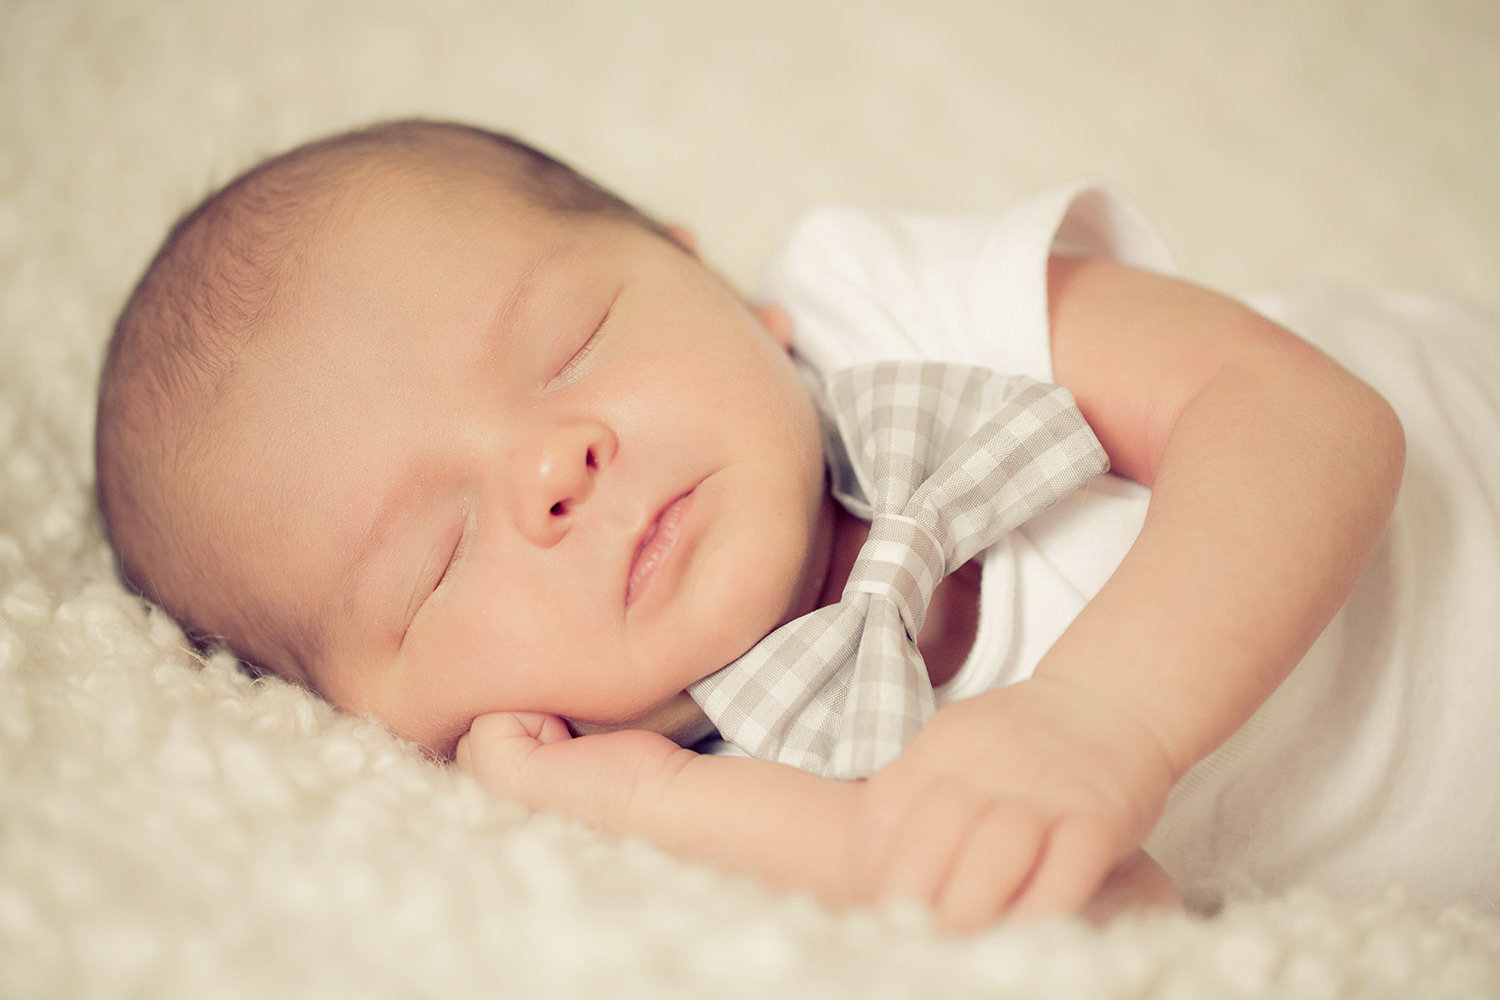 san diego newborn photographer | newborn with cute bow tie sleeping